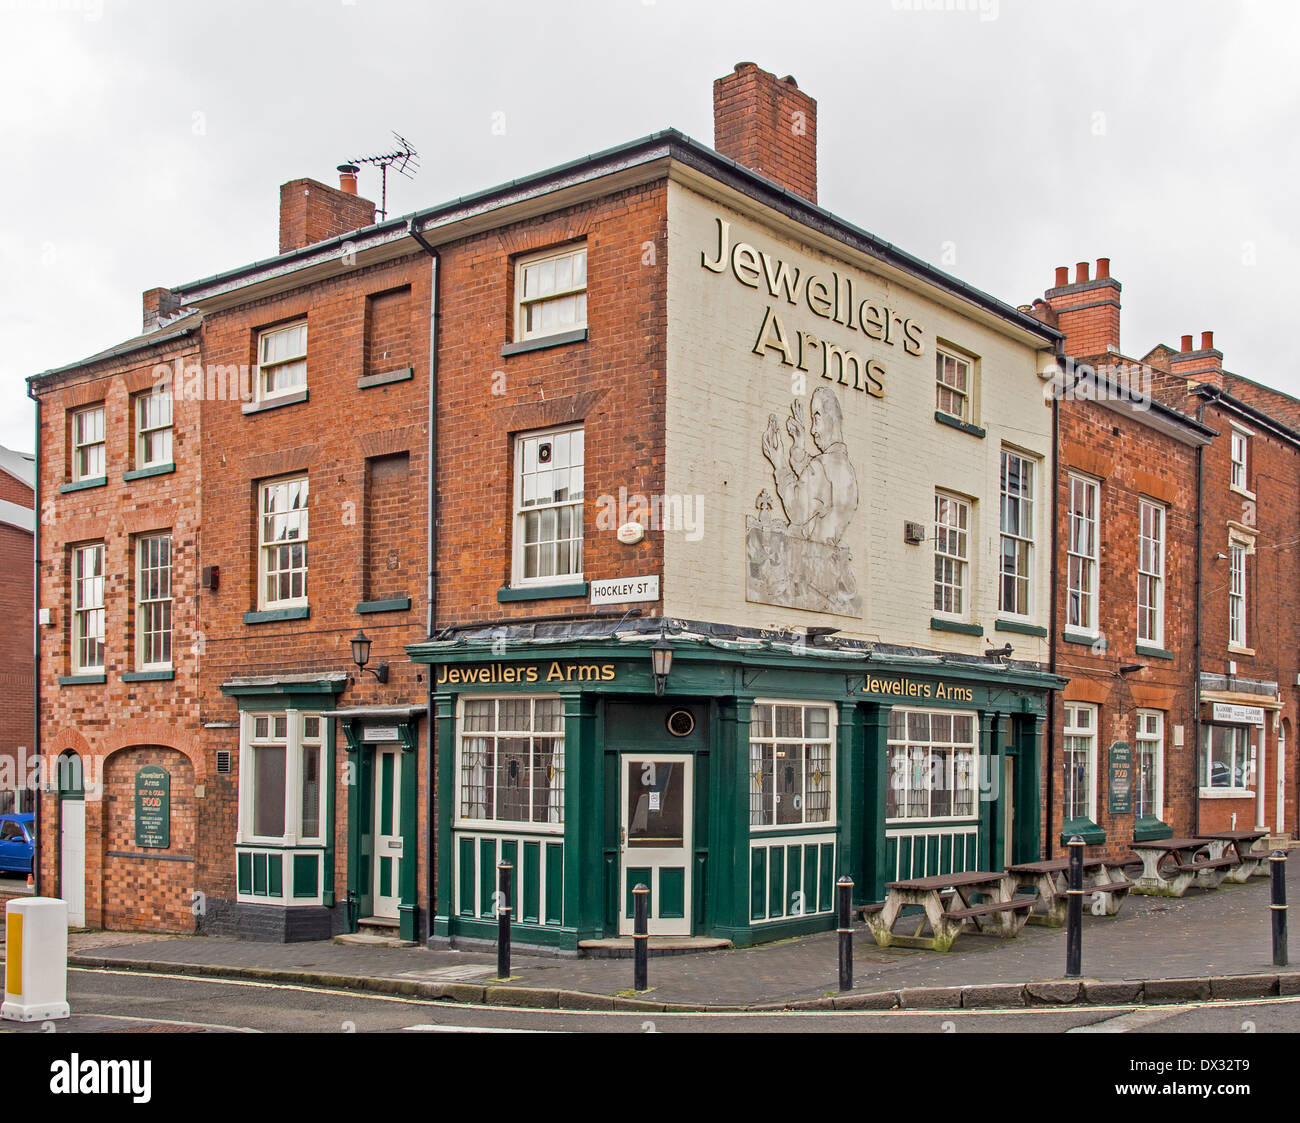 Jewellers Arms pub in the Jewellery Quarter Birmingham UK Stock Photo